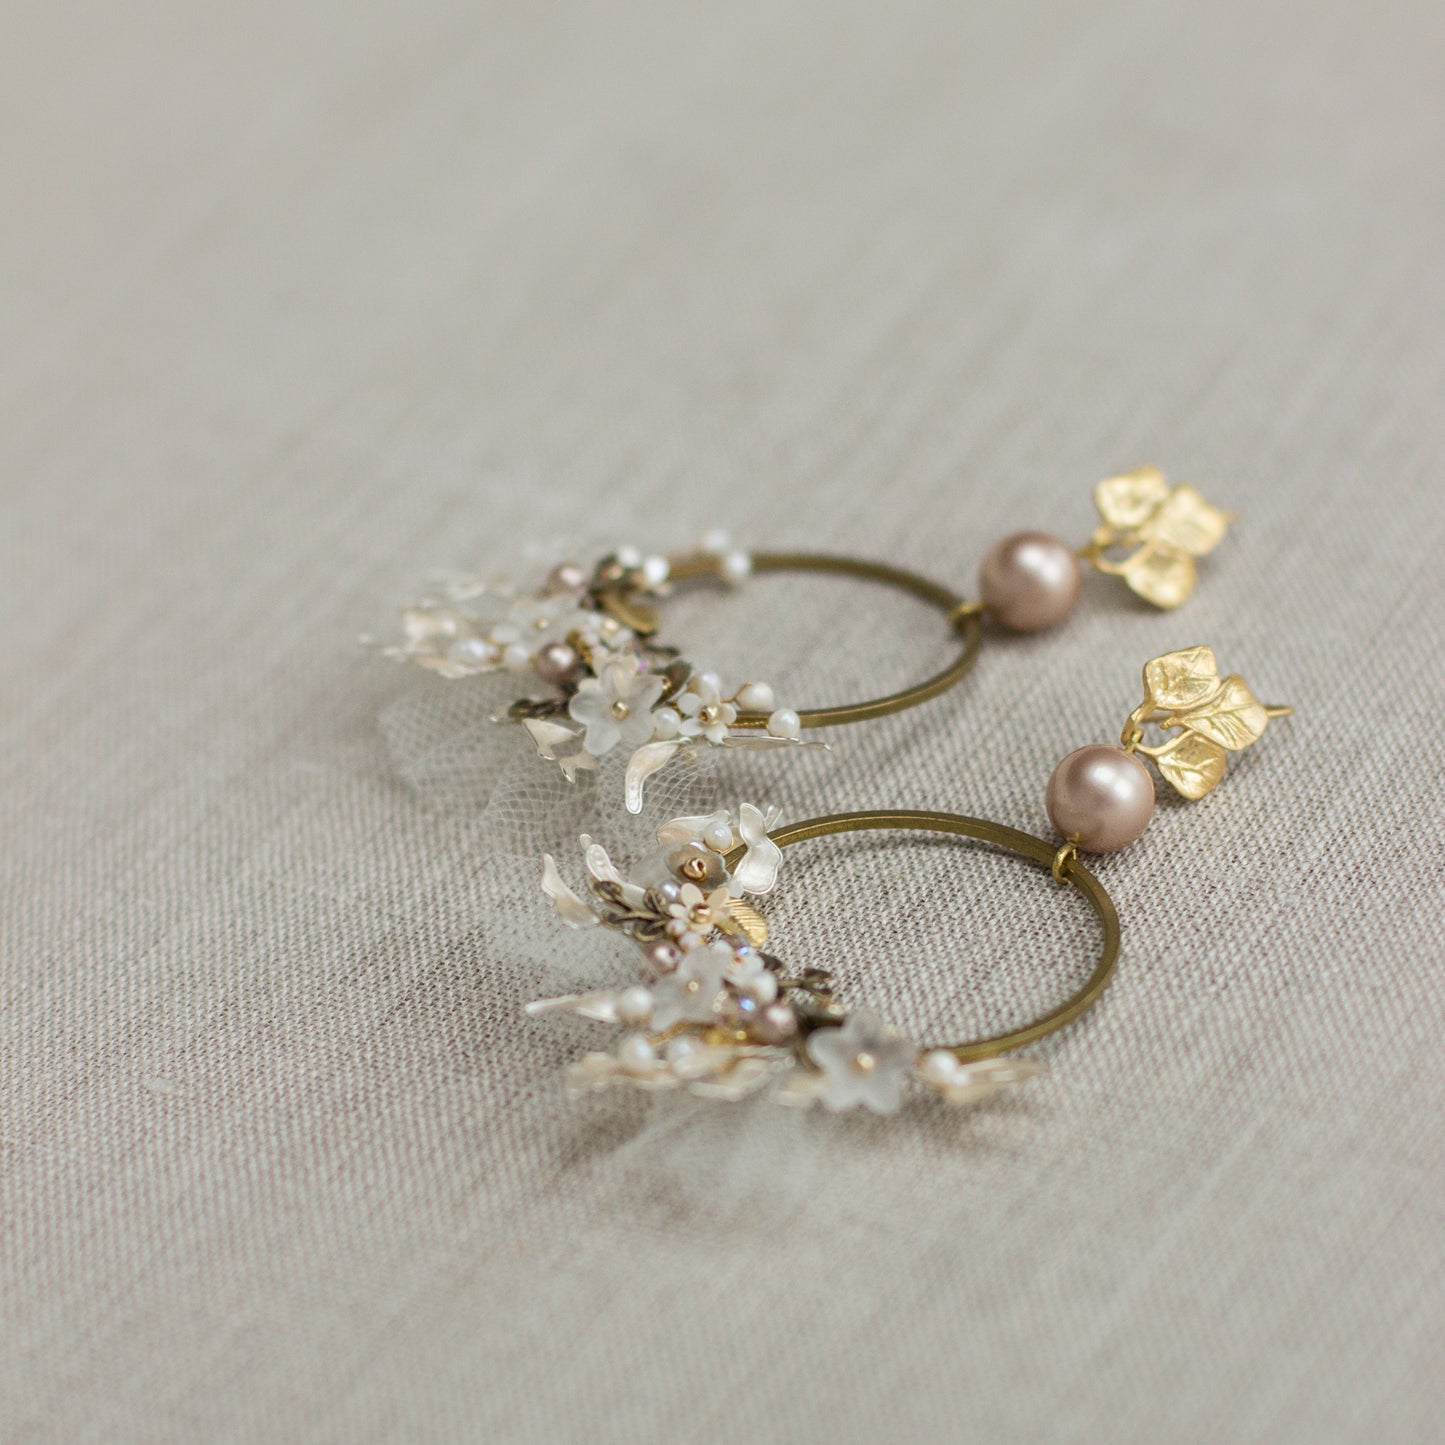 Stylish & unique hoop earrings to make a statement! Floral Pearl Hoop earrings. Wedding earrings. Bridal jewelry. Powder almond earrings. Handmade jewelry. Woman fashion bijouterie. One of a kind accessories.